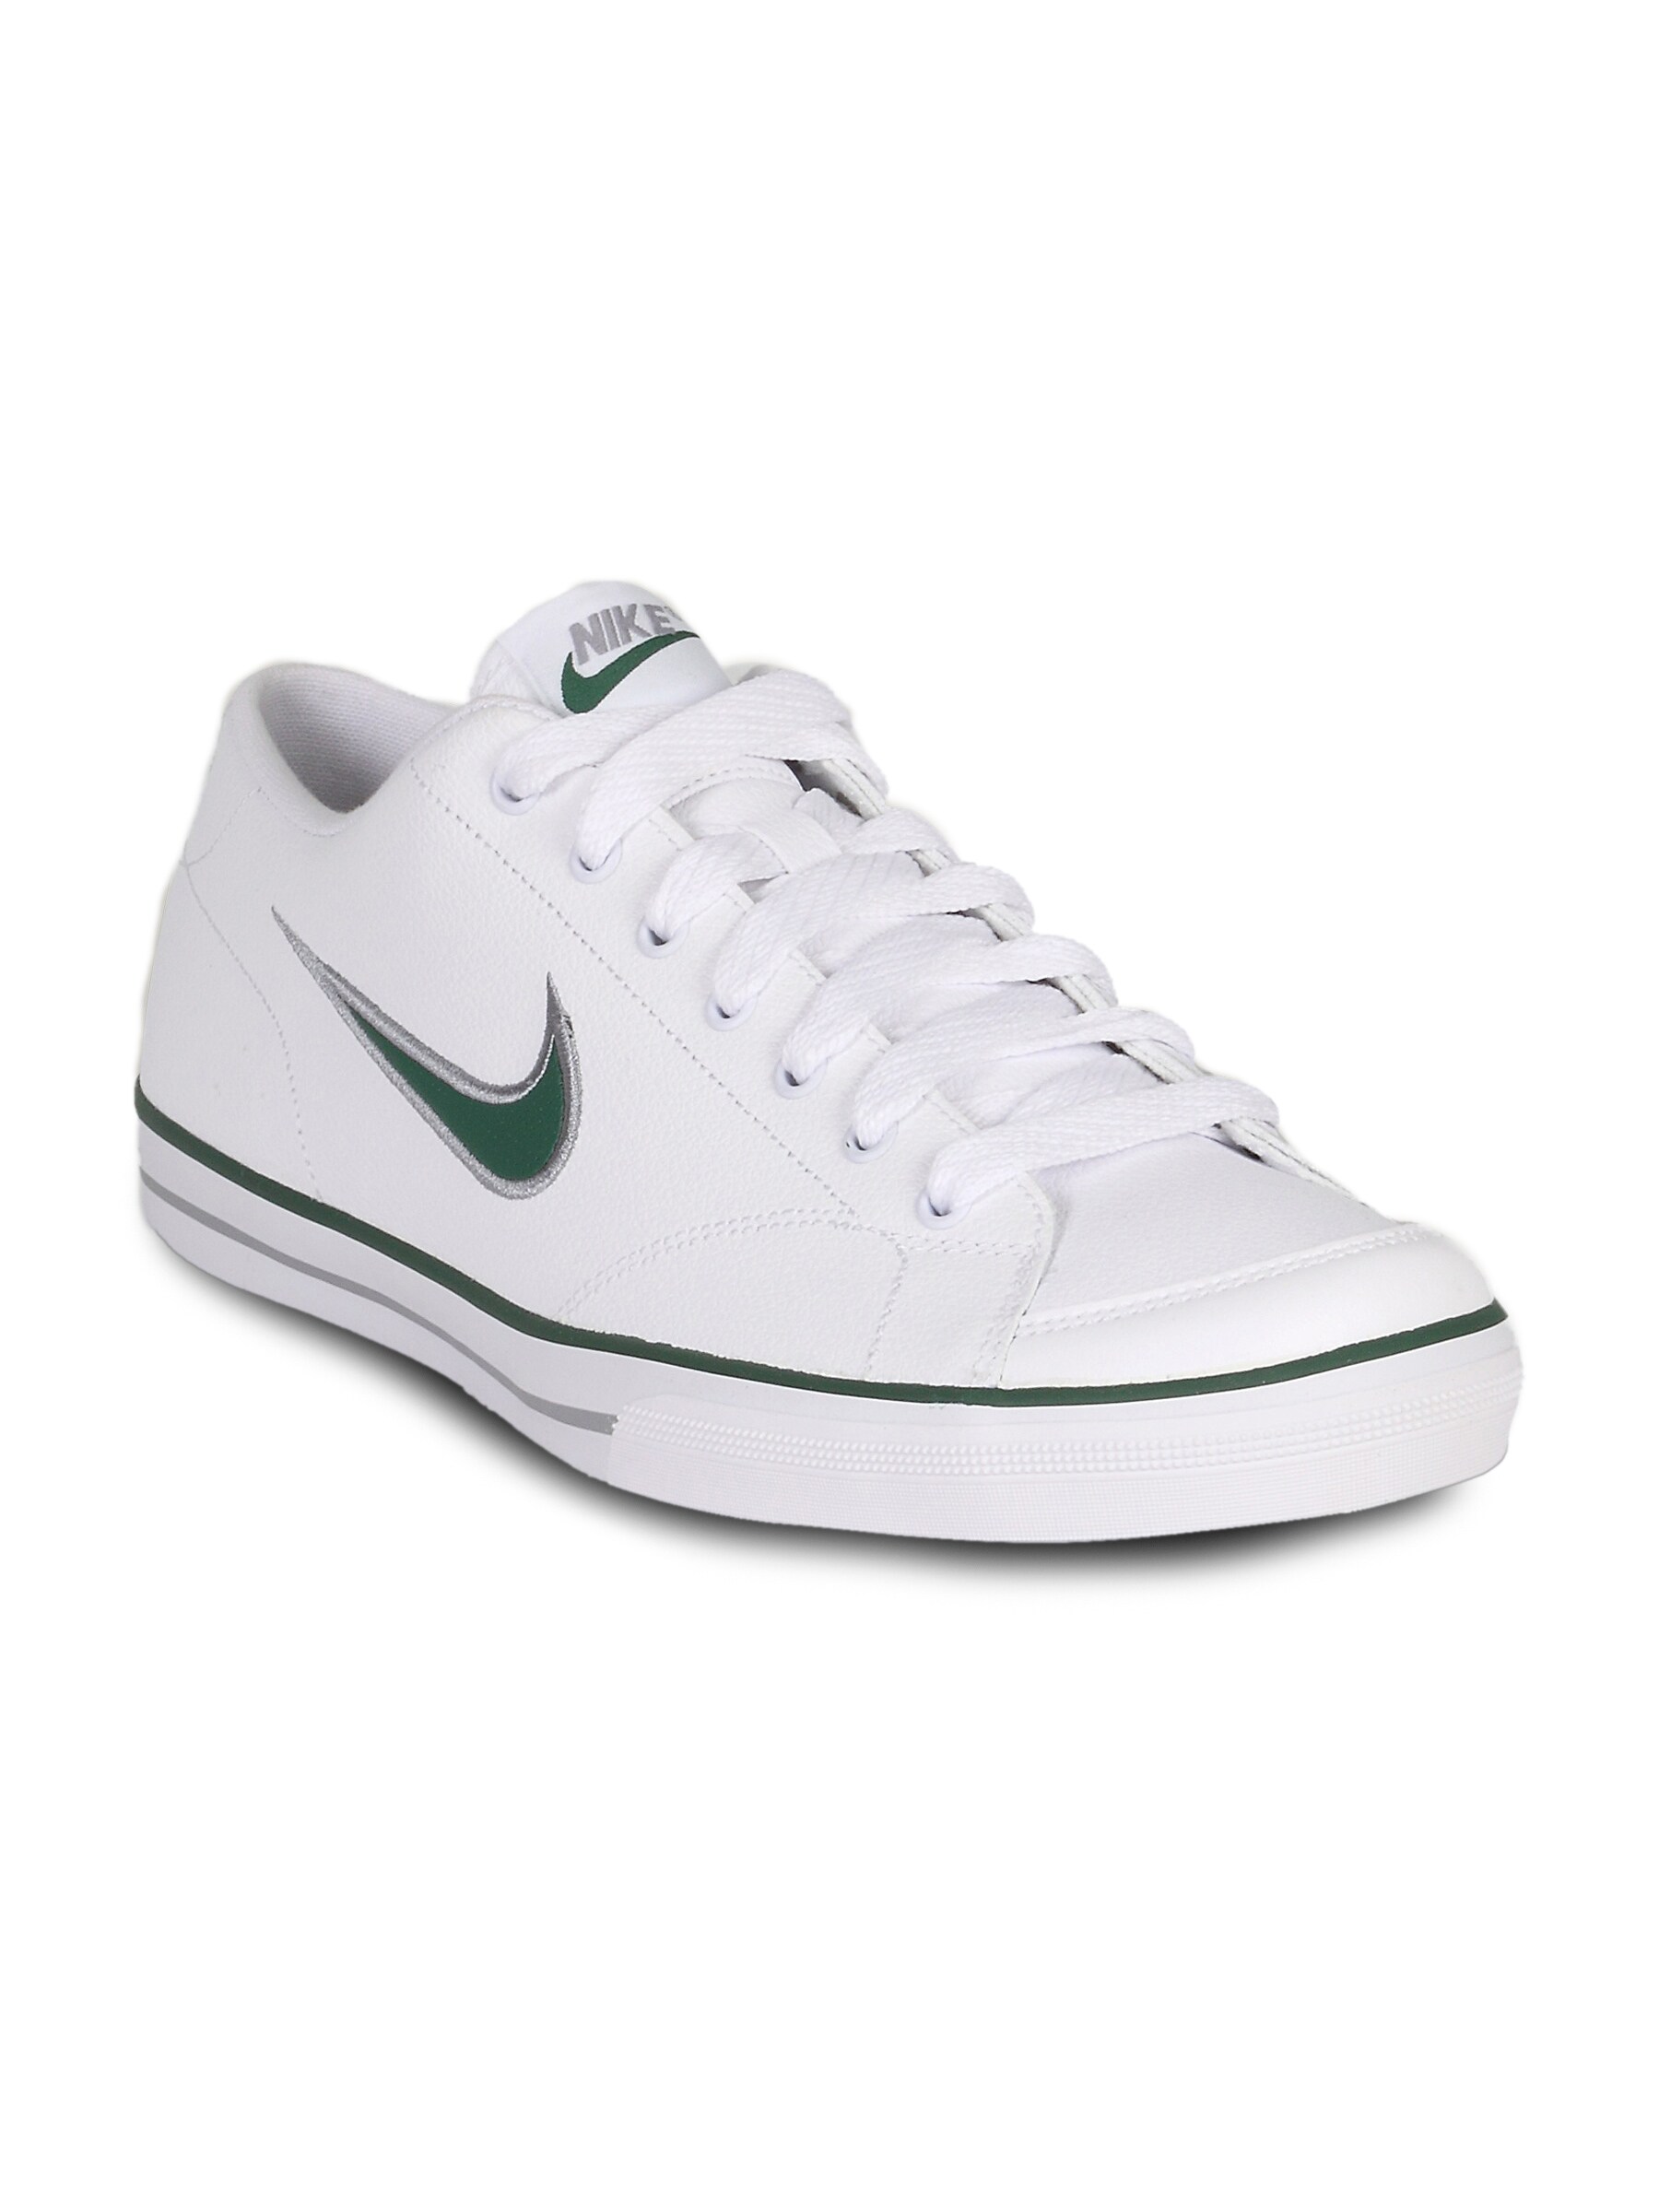 Nike Men's Tennis White Green Shoe